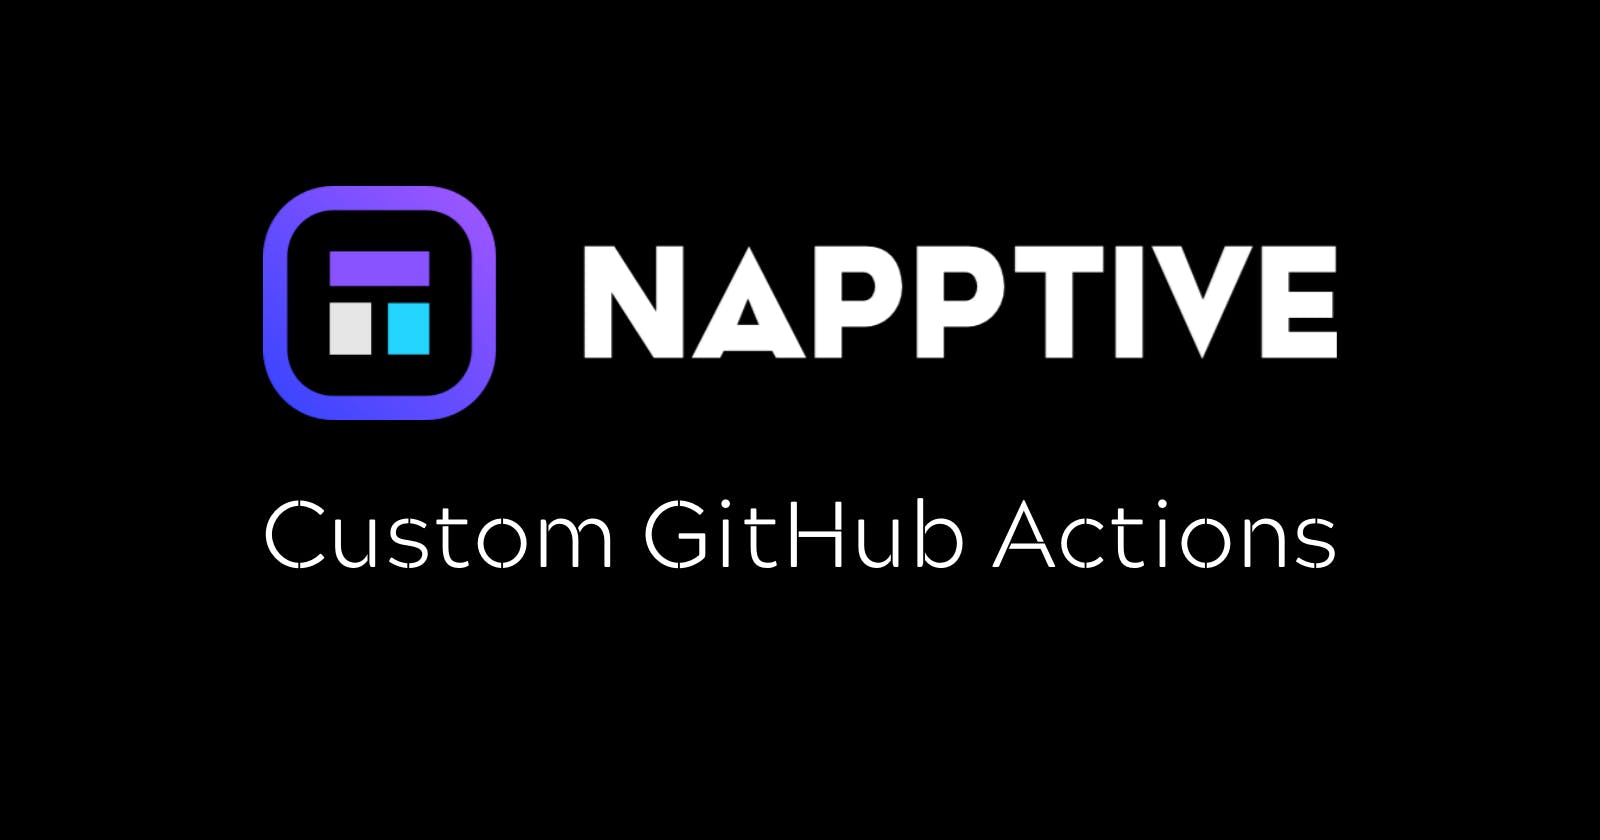 Exploring Napptive GitHub Actions